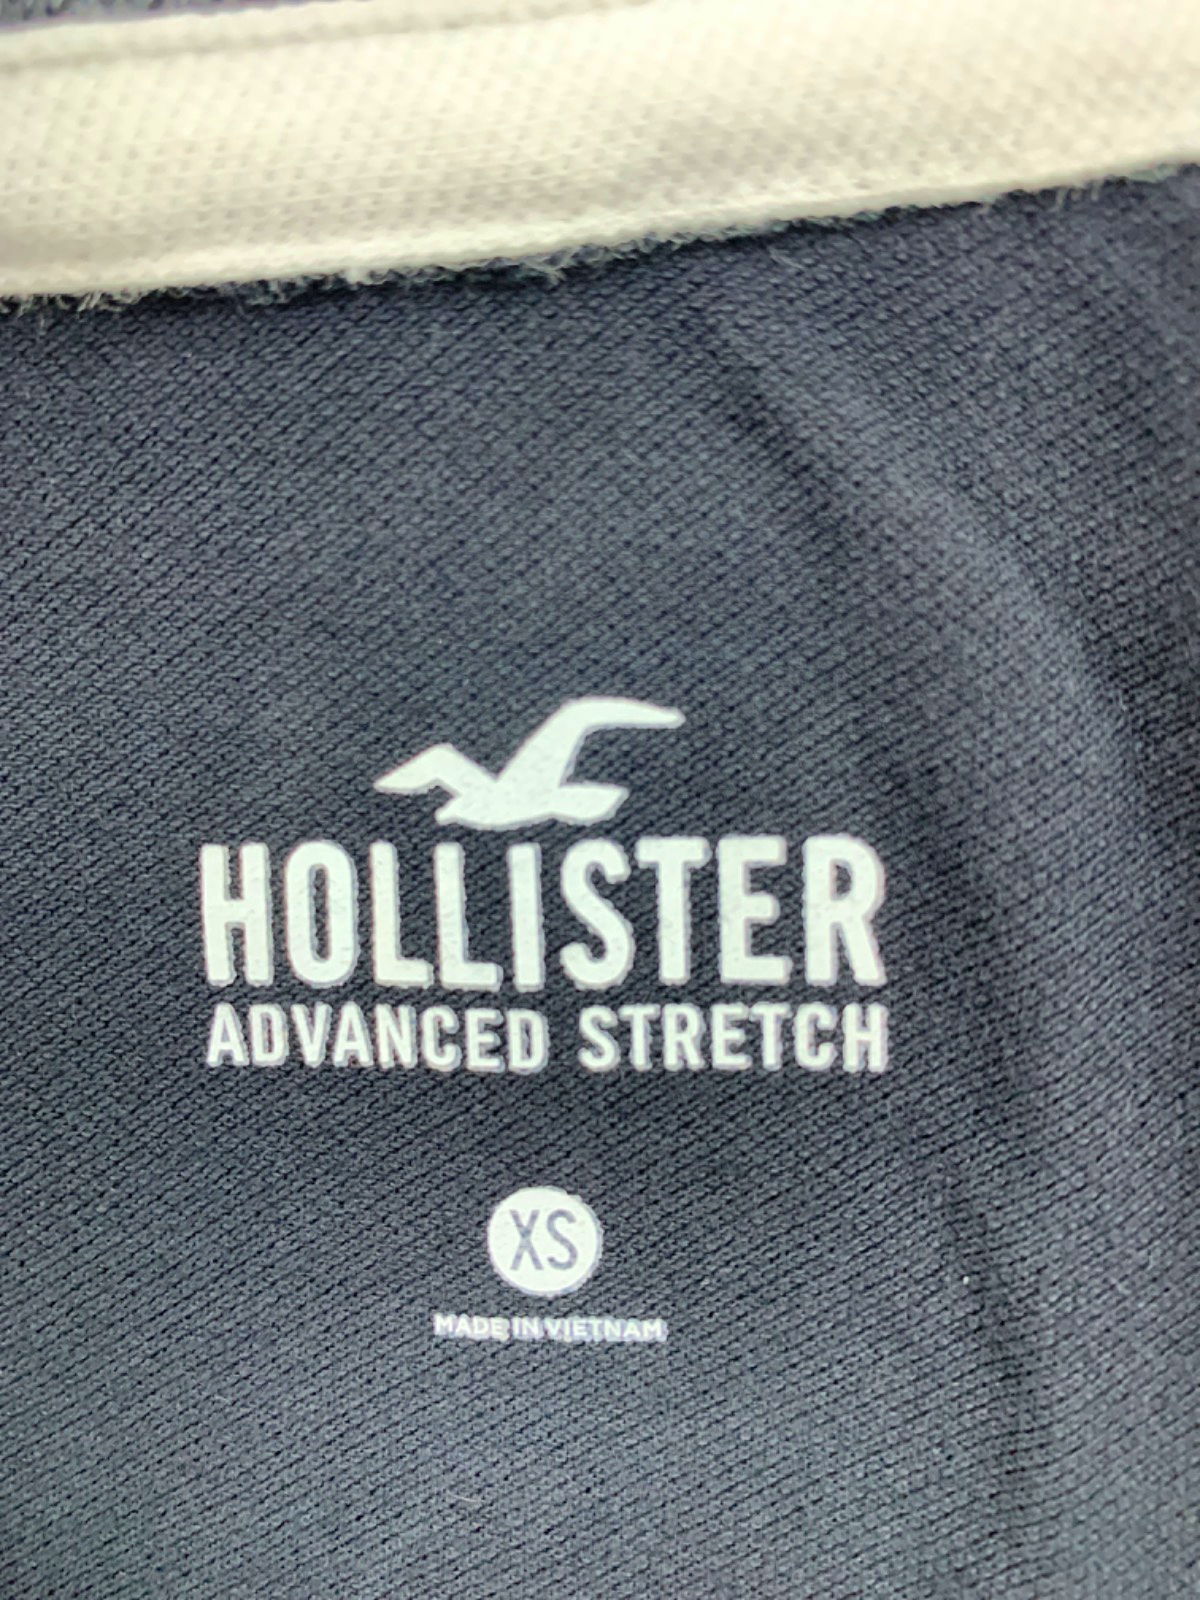 Hollister Navy Advanced Stretch Polo Shirt XS